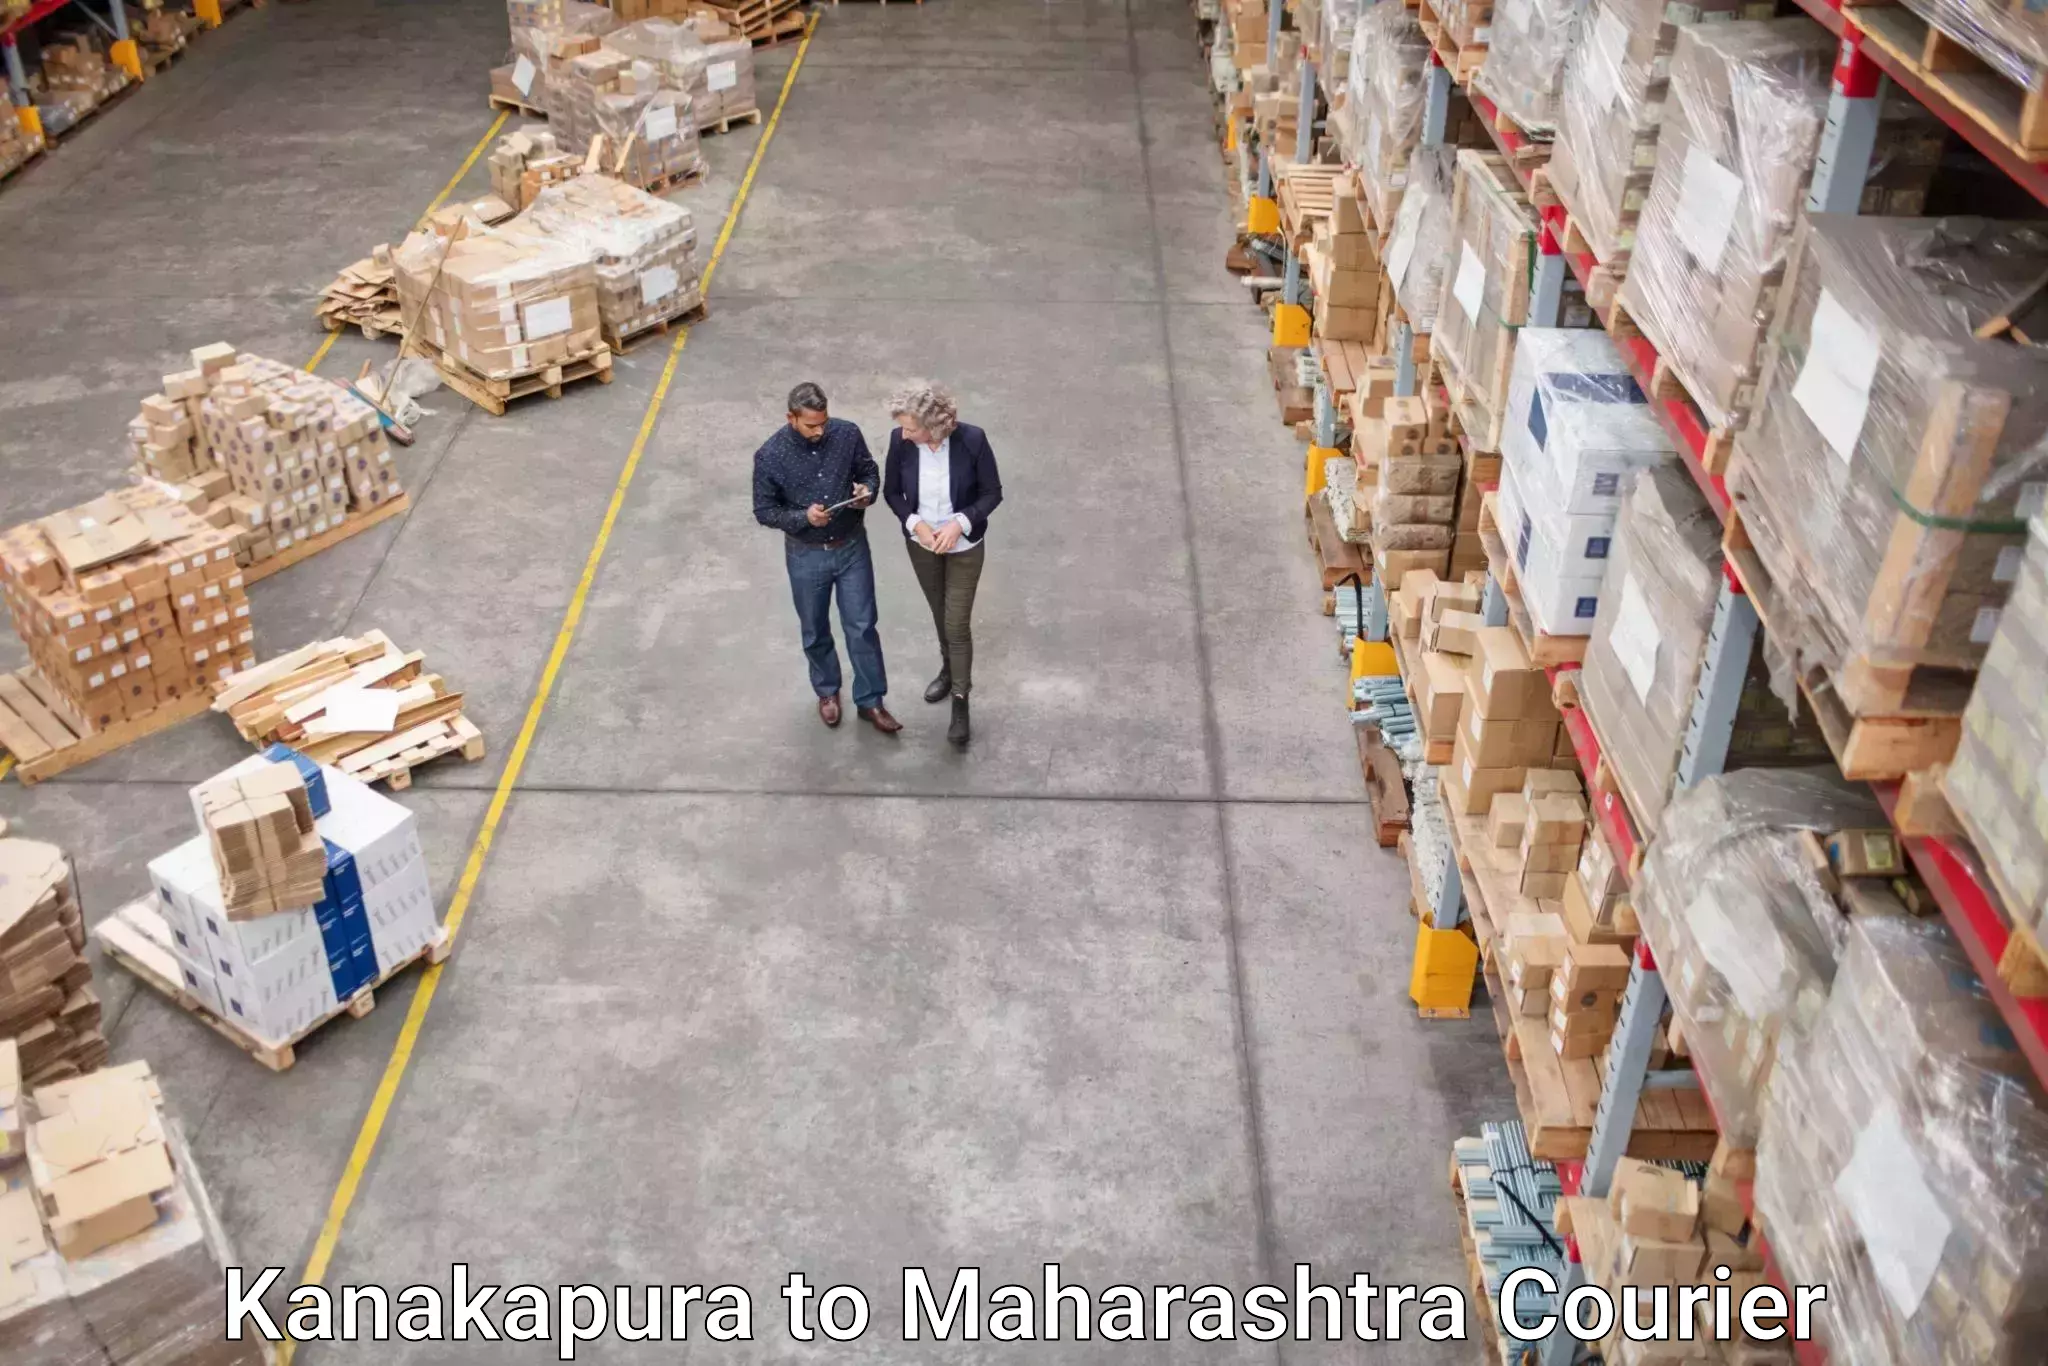 Courier service booking Kanakapura to Dusarbid